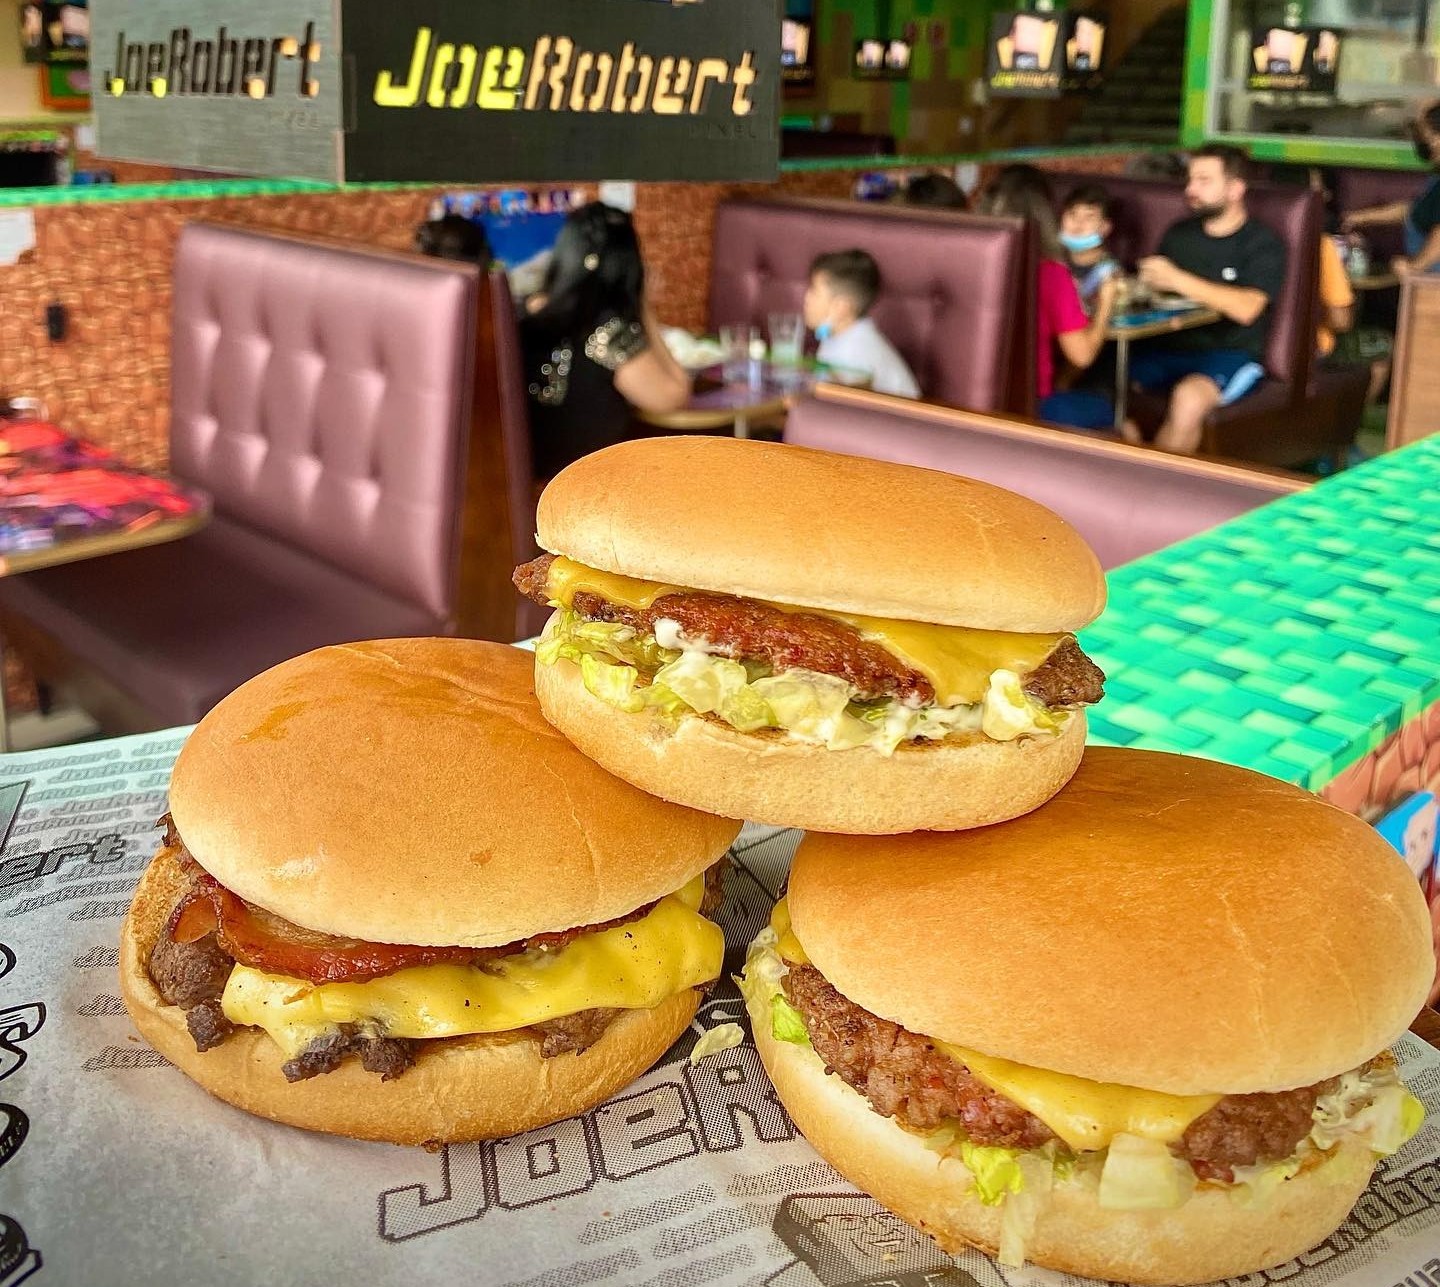 Joe Robert – A maior hamburgueria temática do Brasil